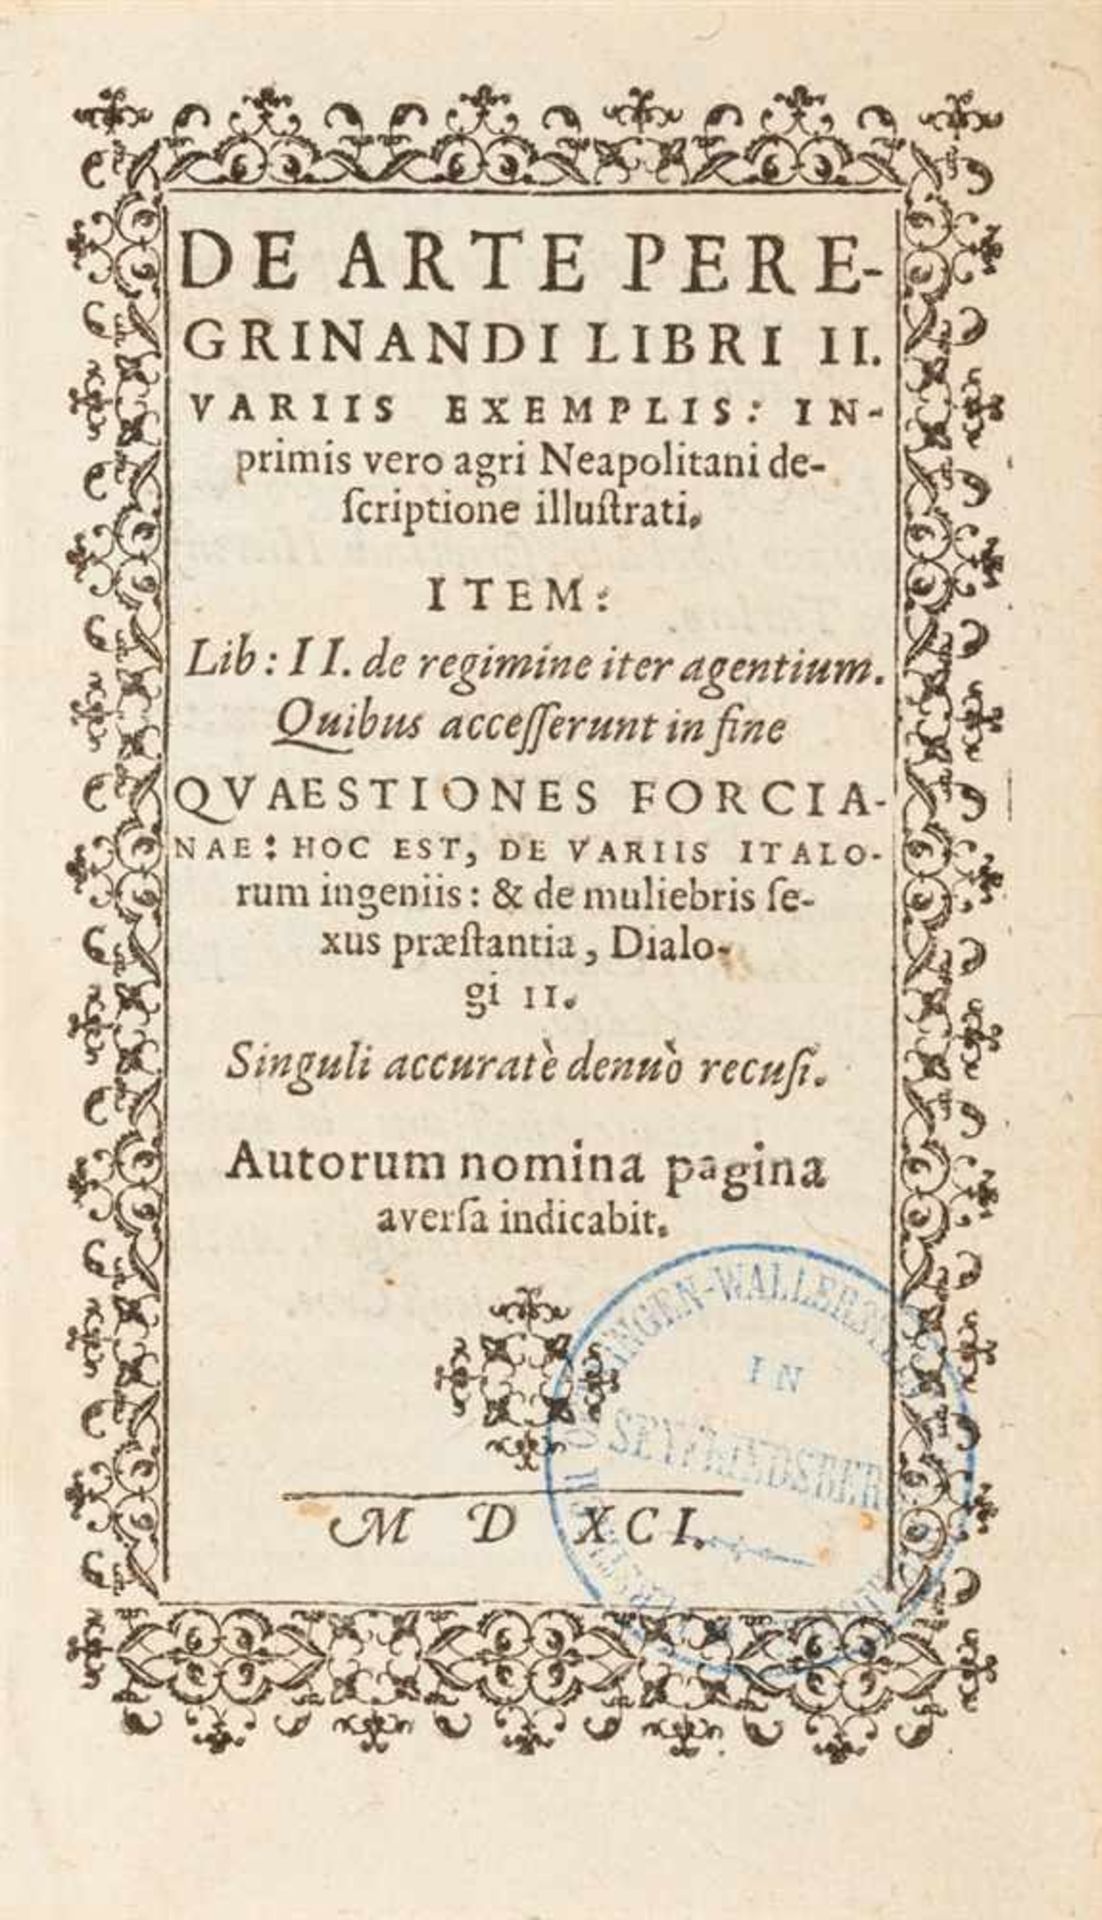 Pyrckmair, Hilarius (u.a.): De arte peregrinandi libri II. variis exemplis. In primis vero agri